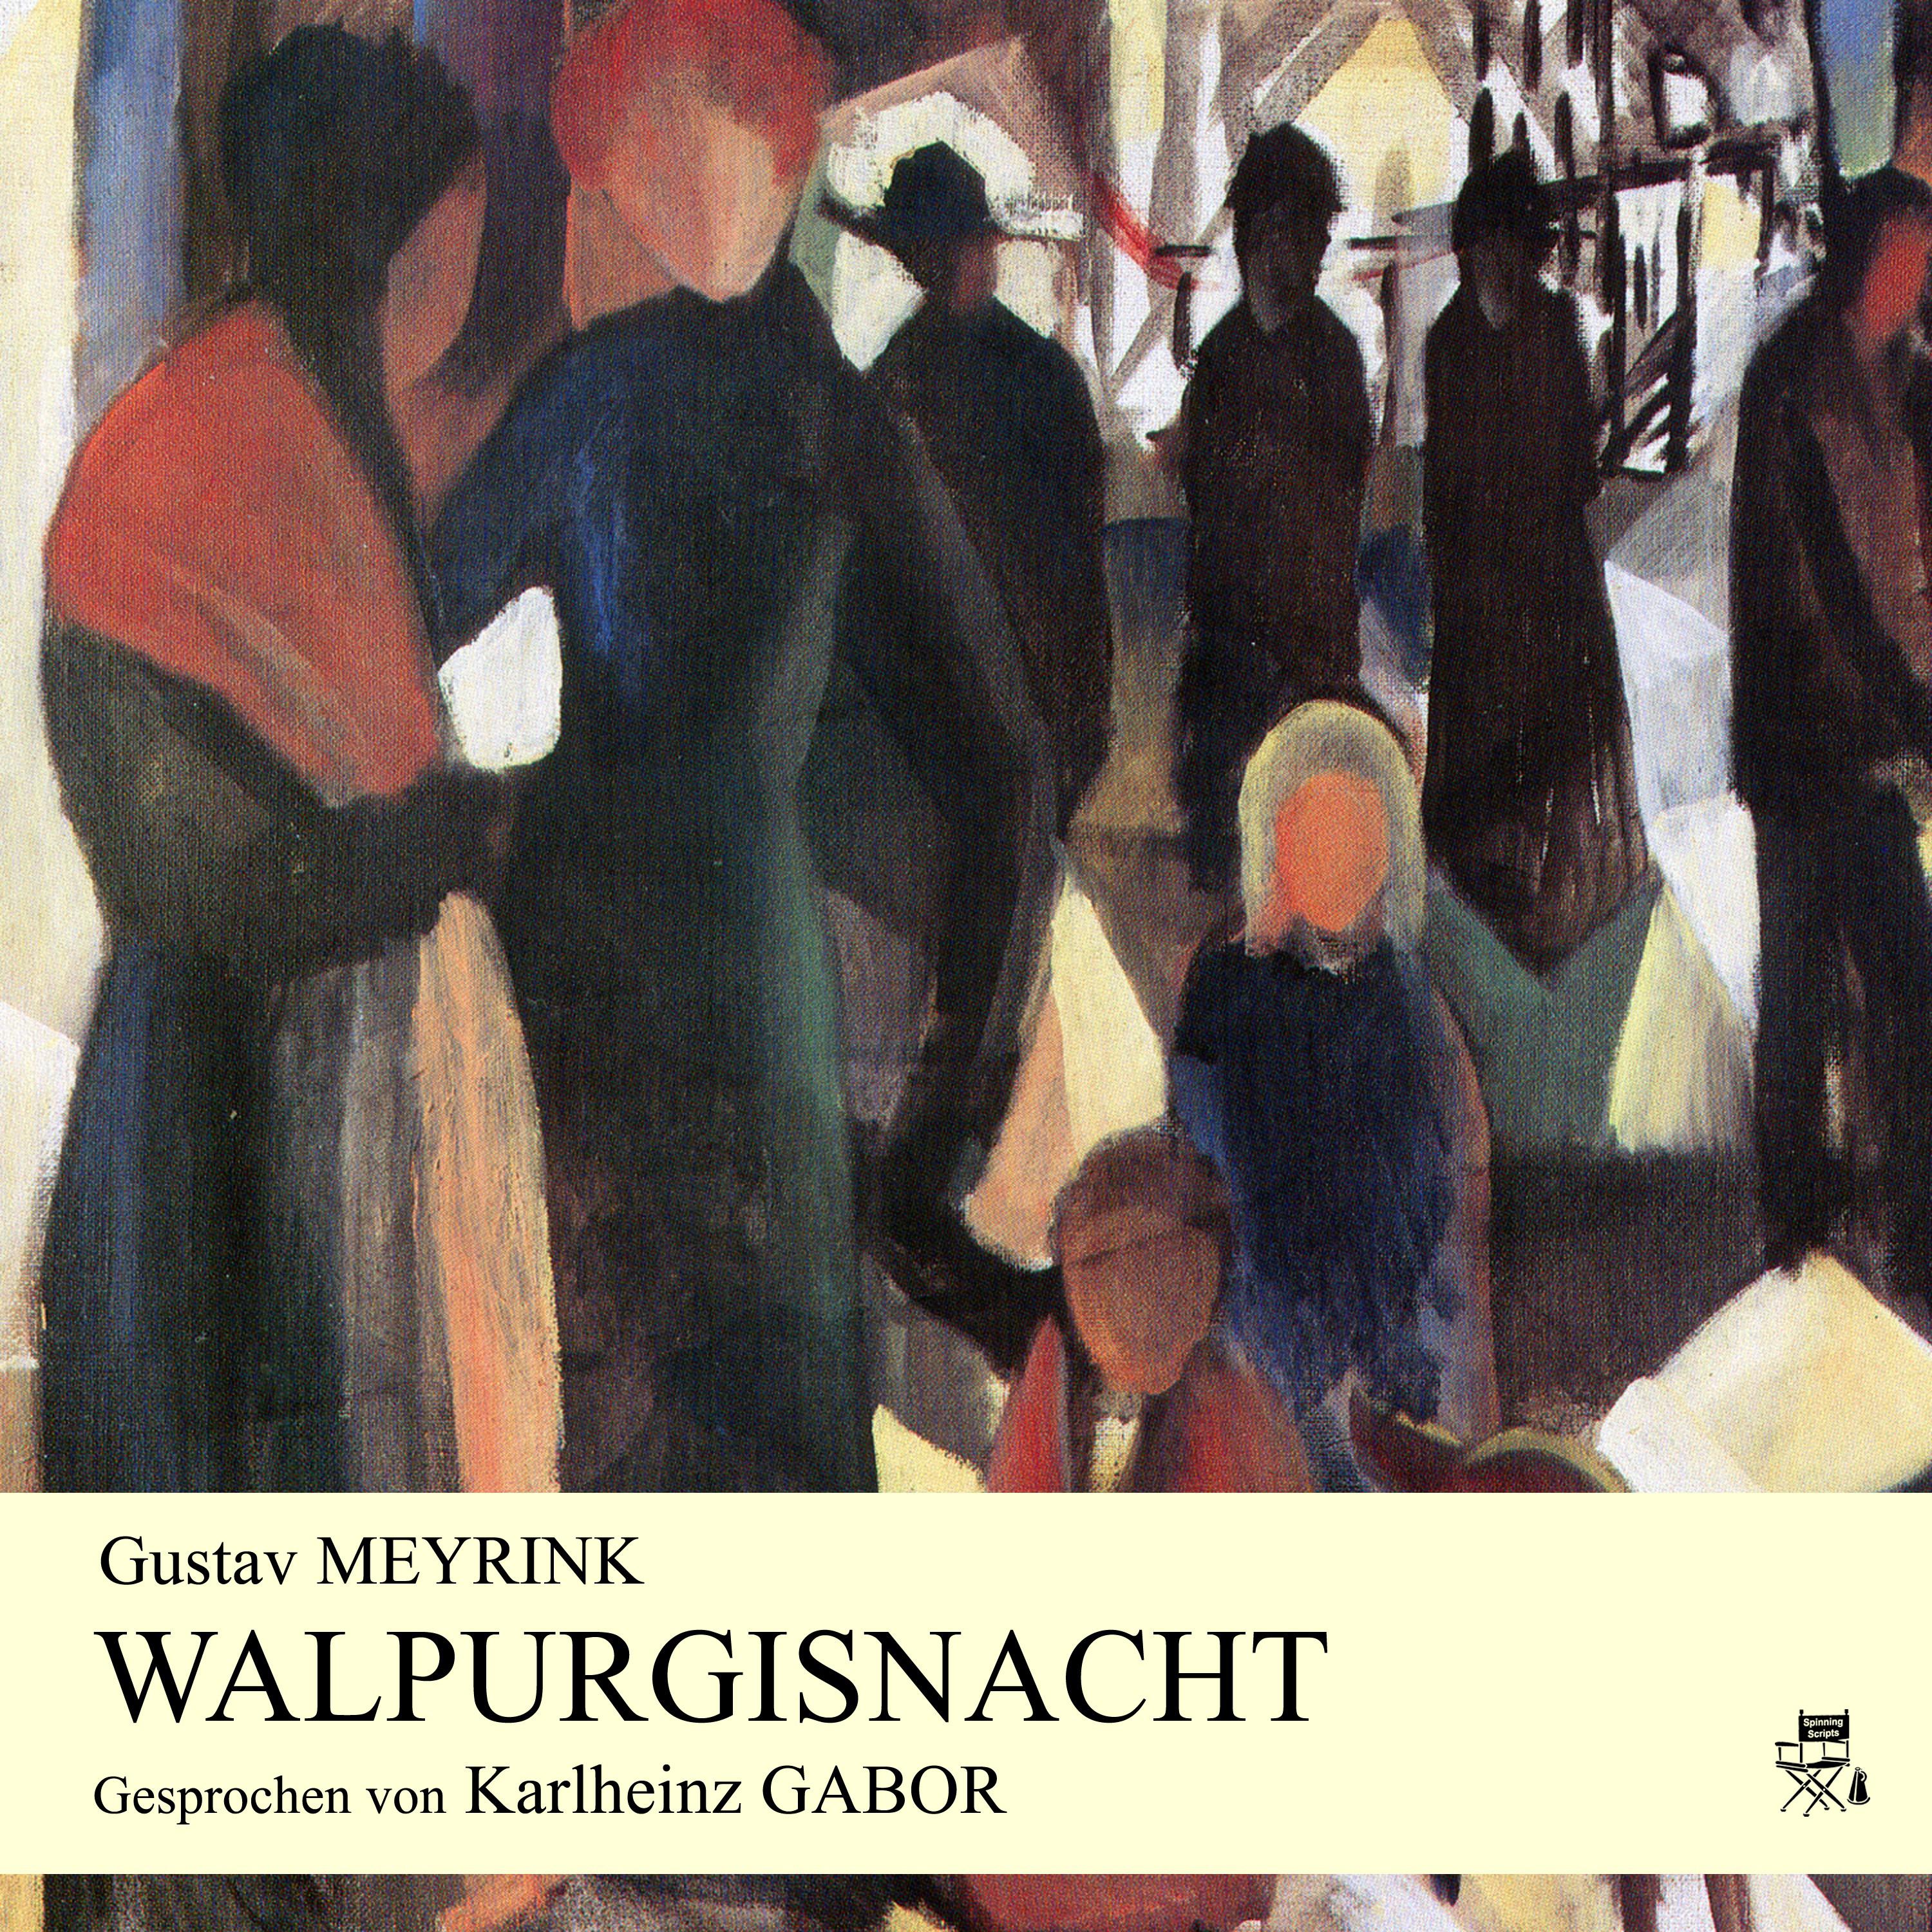 Kapitel 7: Walpurgisnacht (Teil 5)